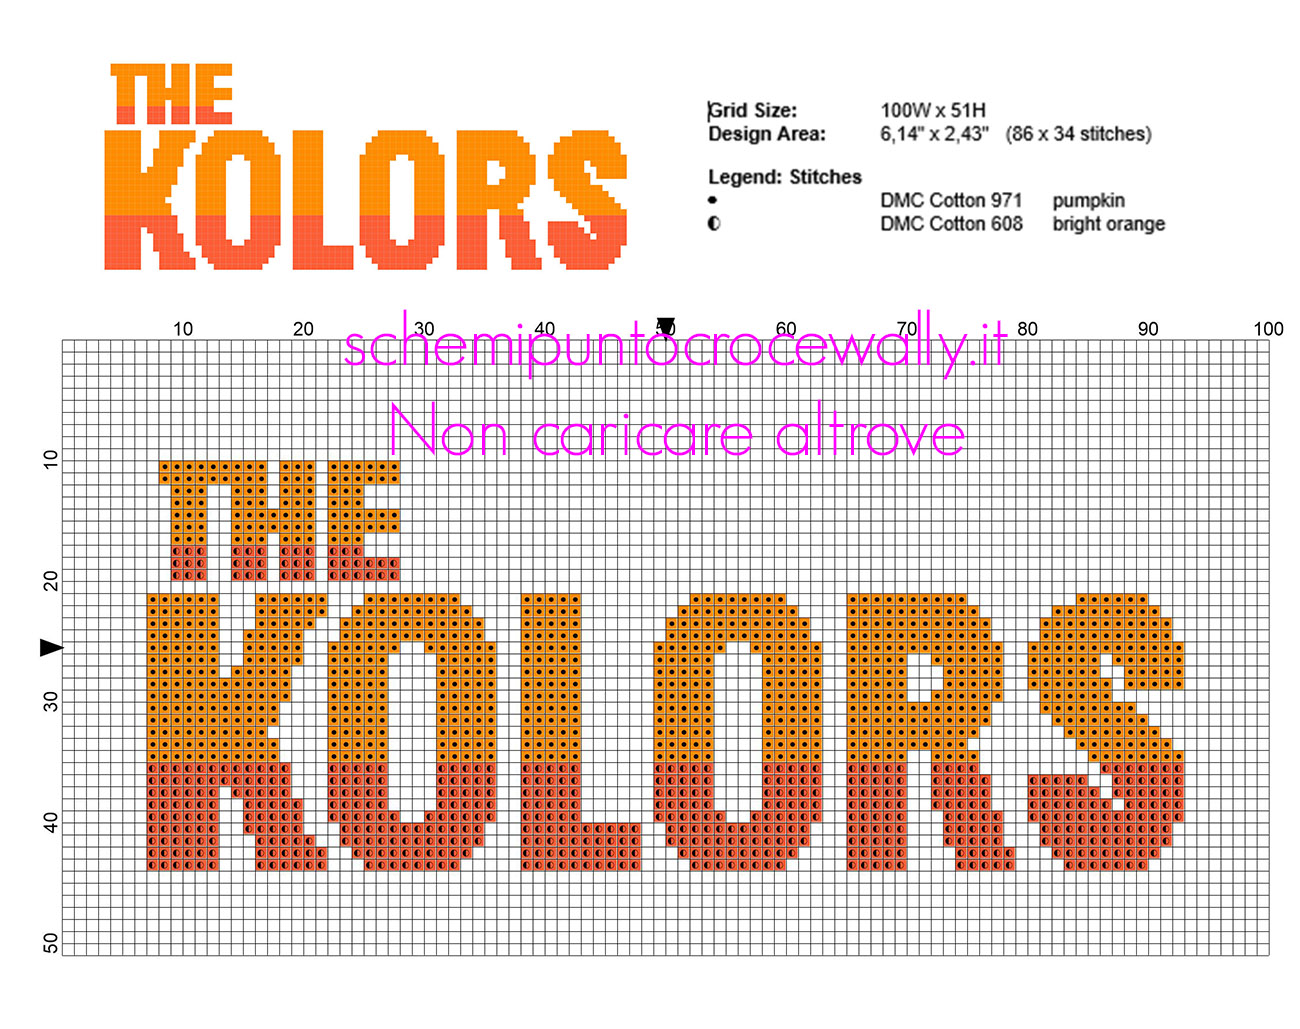 Schema da ricamare punto croce logo dei The Kolors